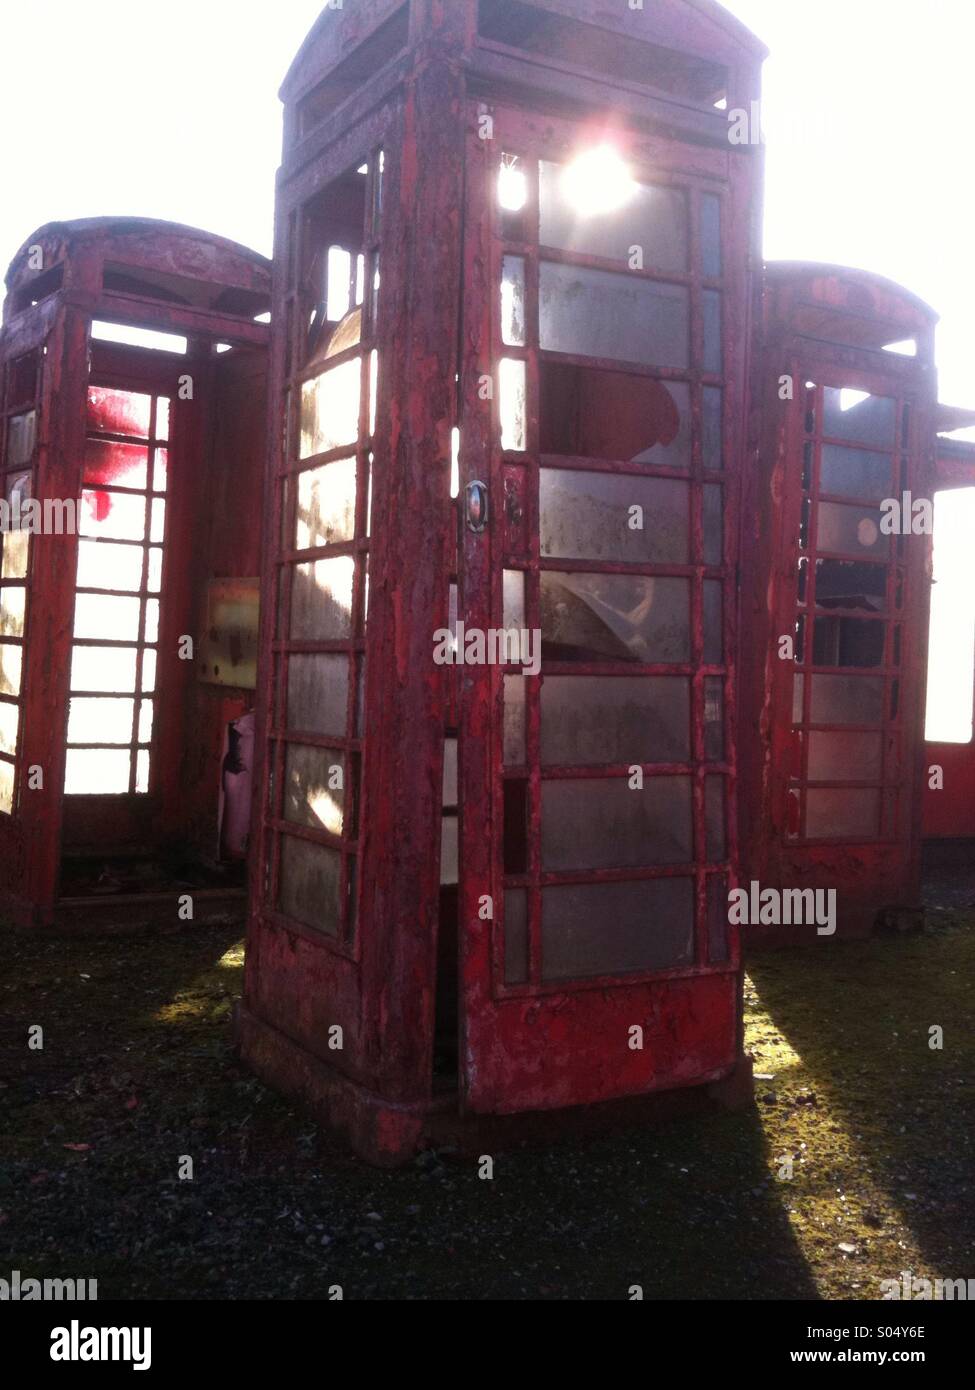 Old British phone boxes Stock Photo